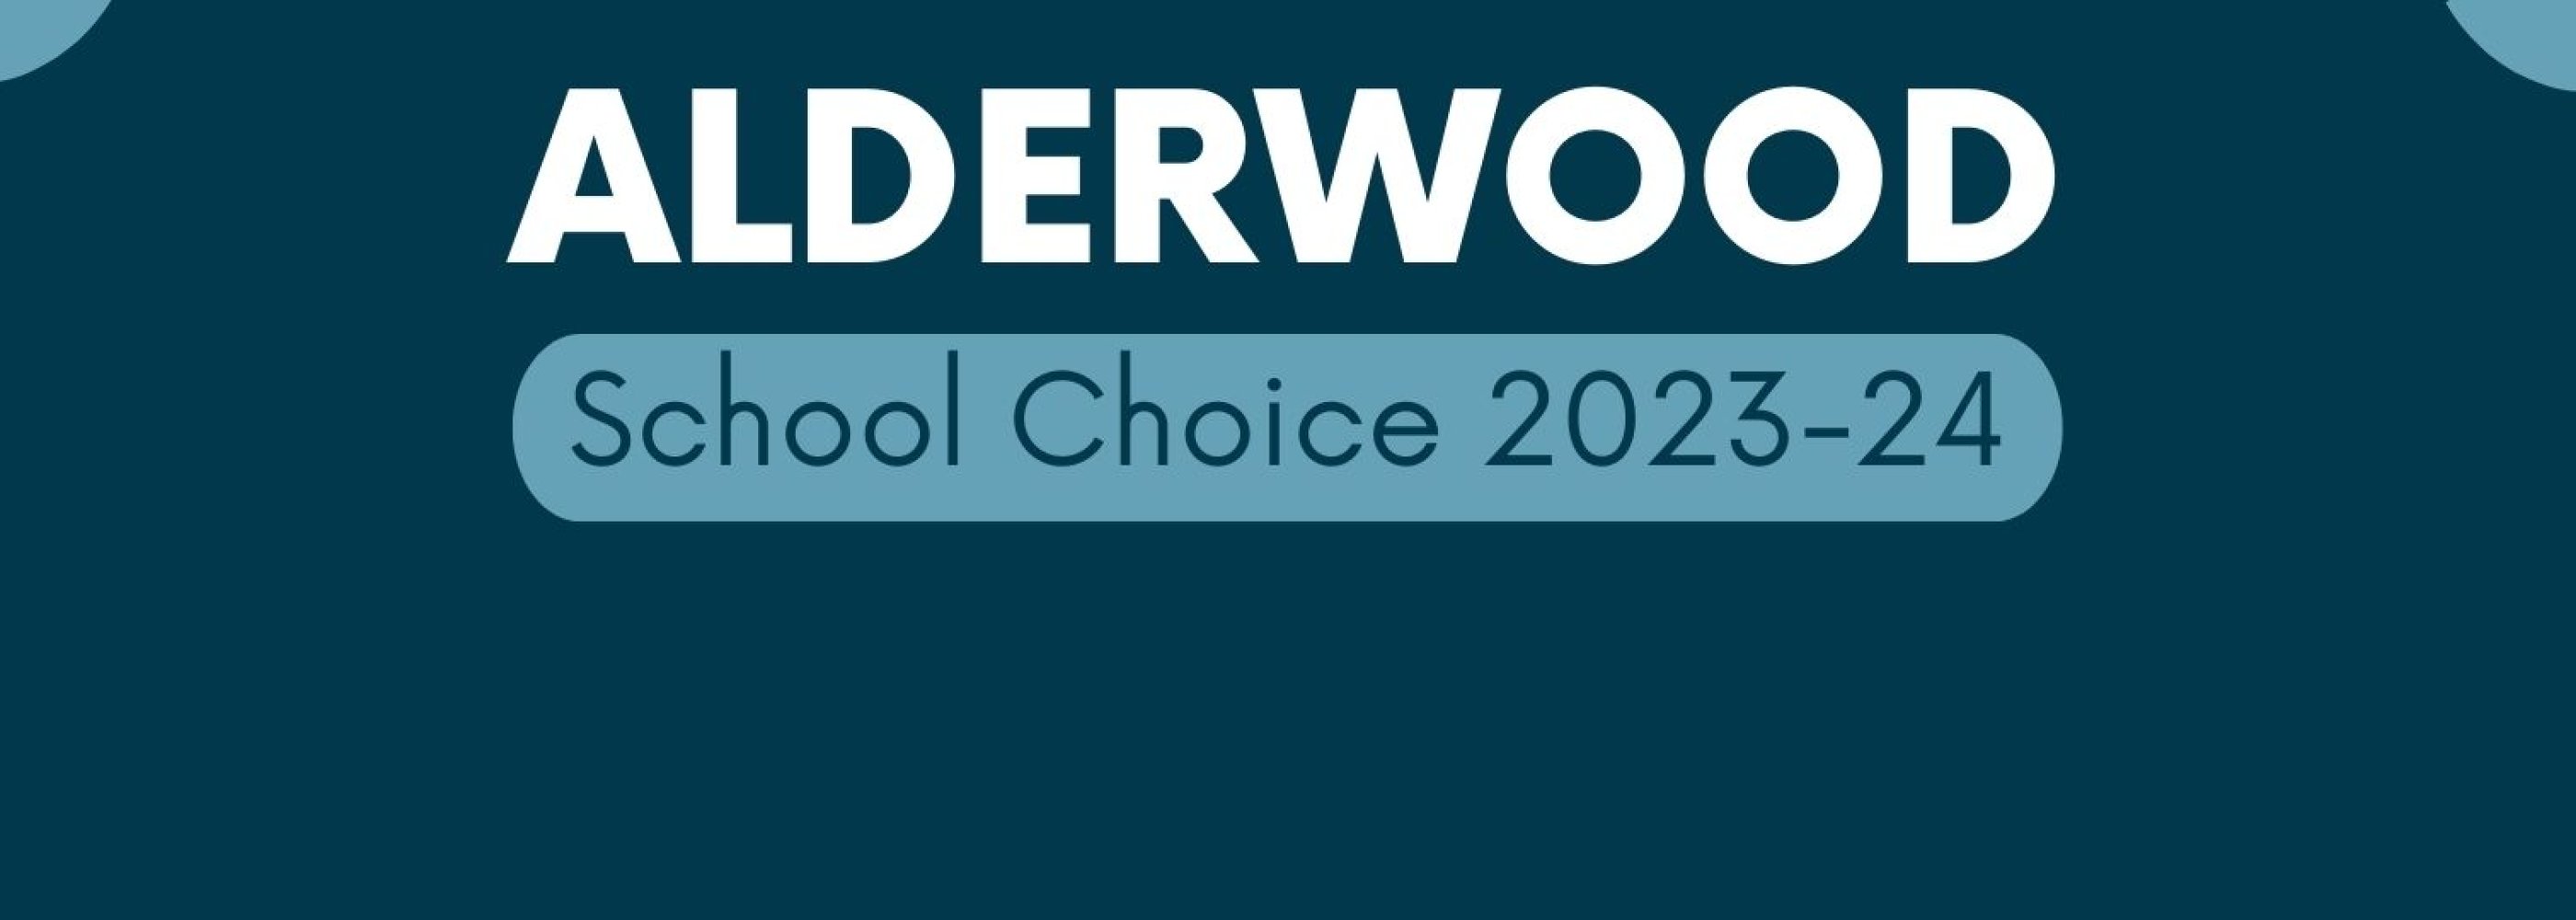 Alderwood school choice banner